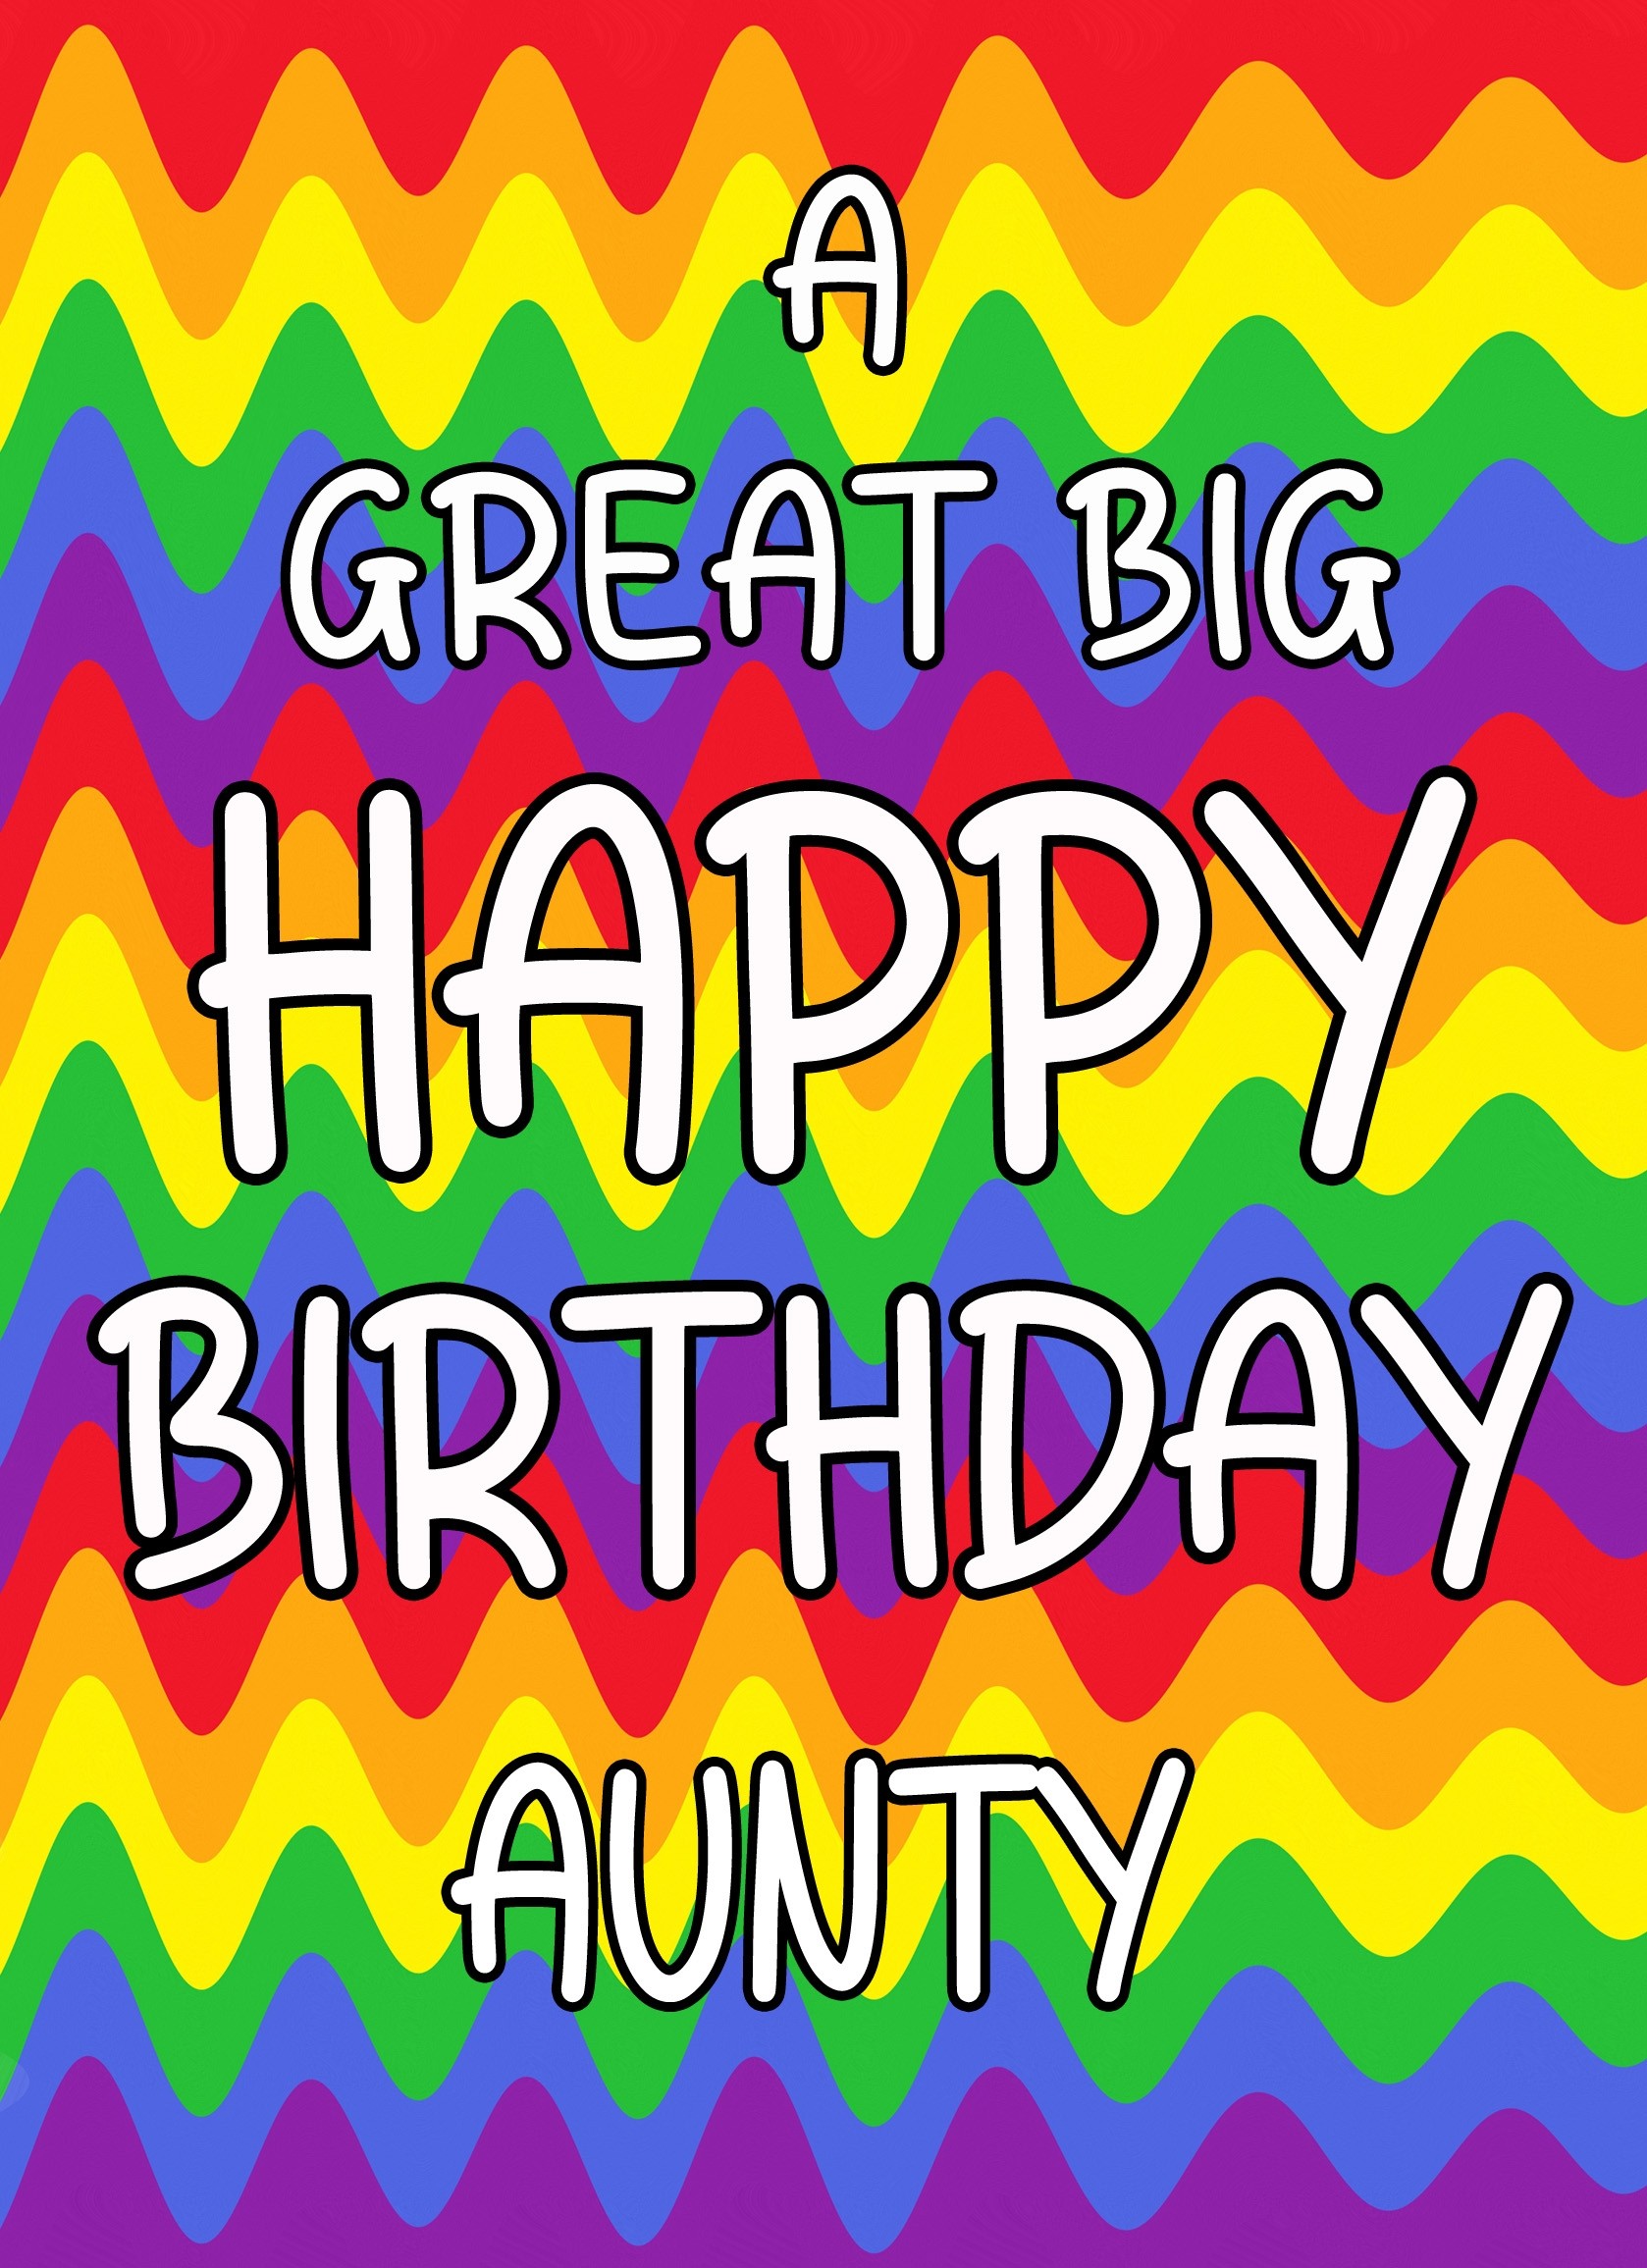 Happy Birthday 'Aunty' Greeting Card (Rainbow)